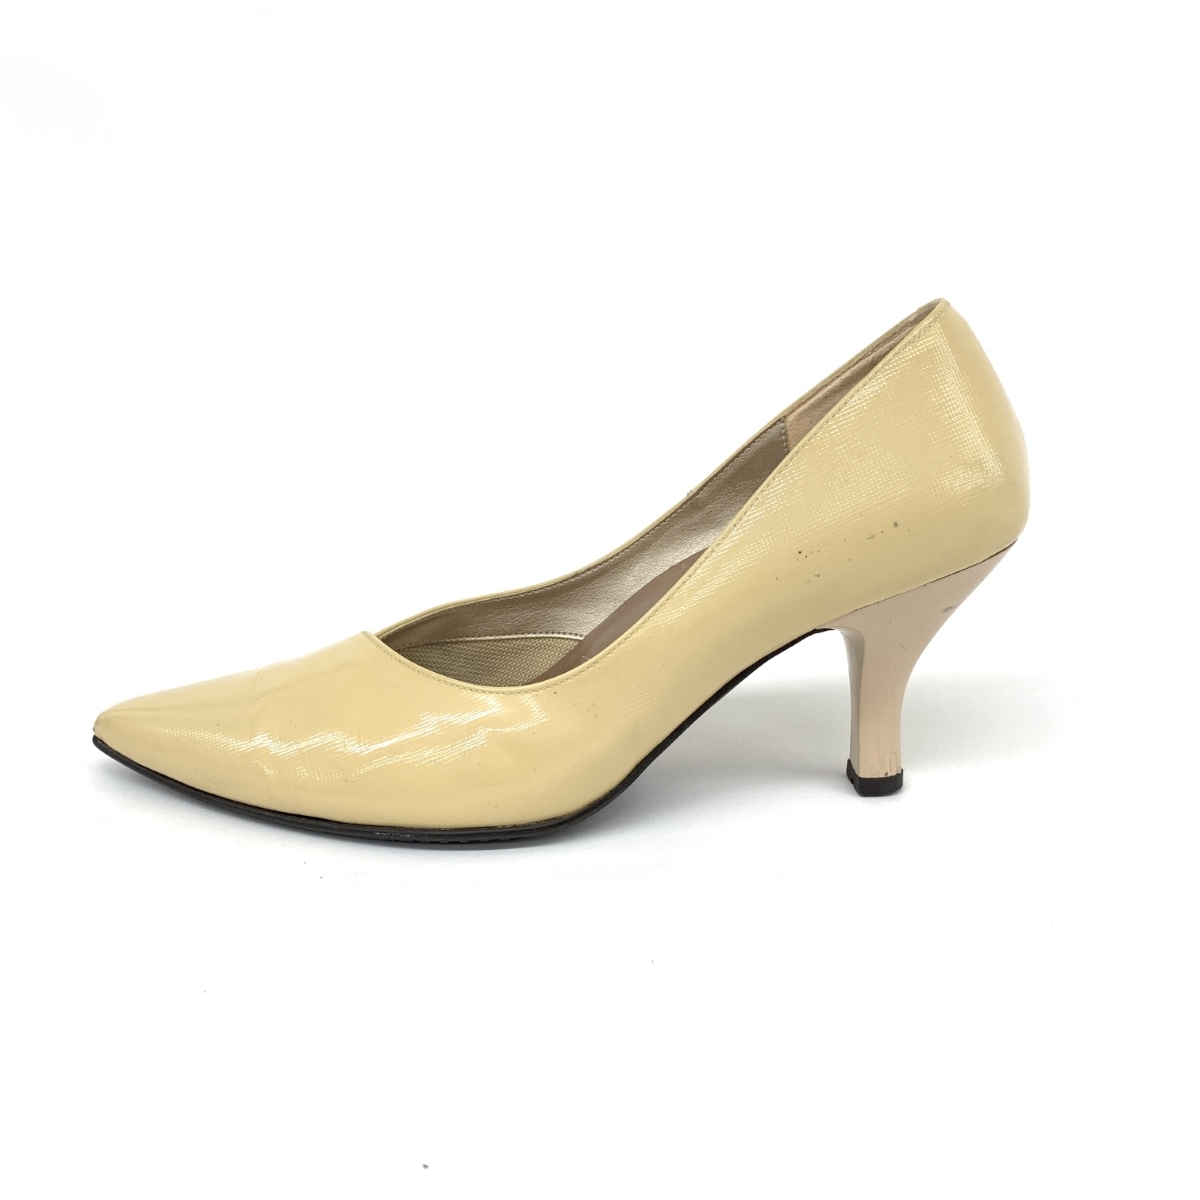 *Wacoal SUCCESS WALKsakses walk ( Wacoal ) туфли-лодочки 24 1/2* желтый женский обувь обувь shoes